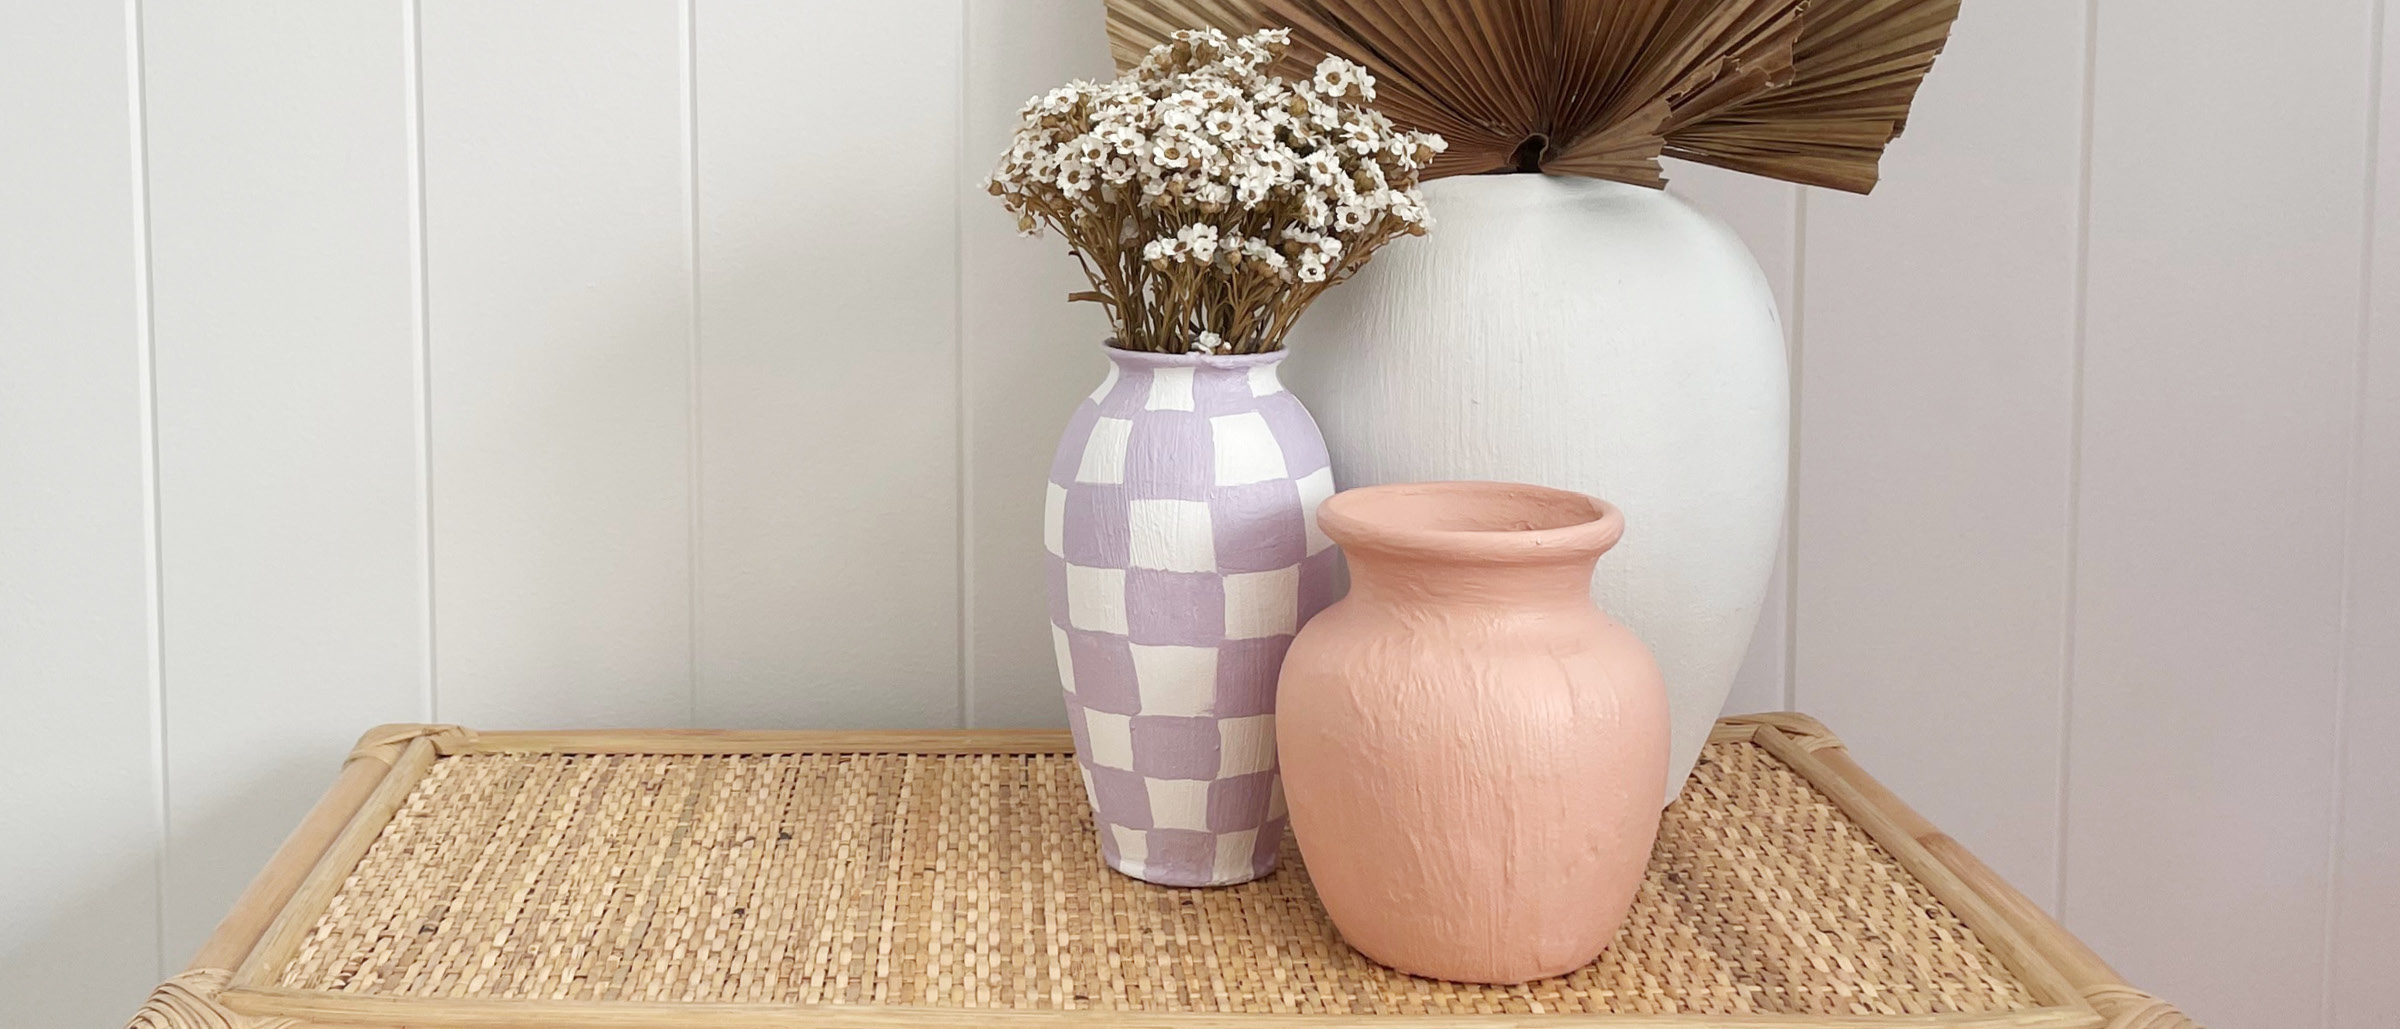 Glow Up your Ceramic Vases